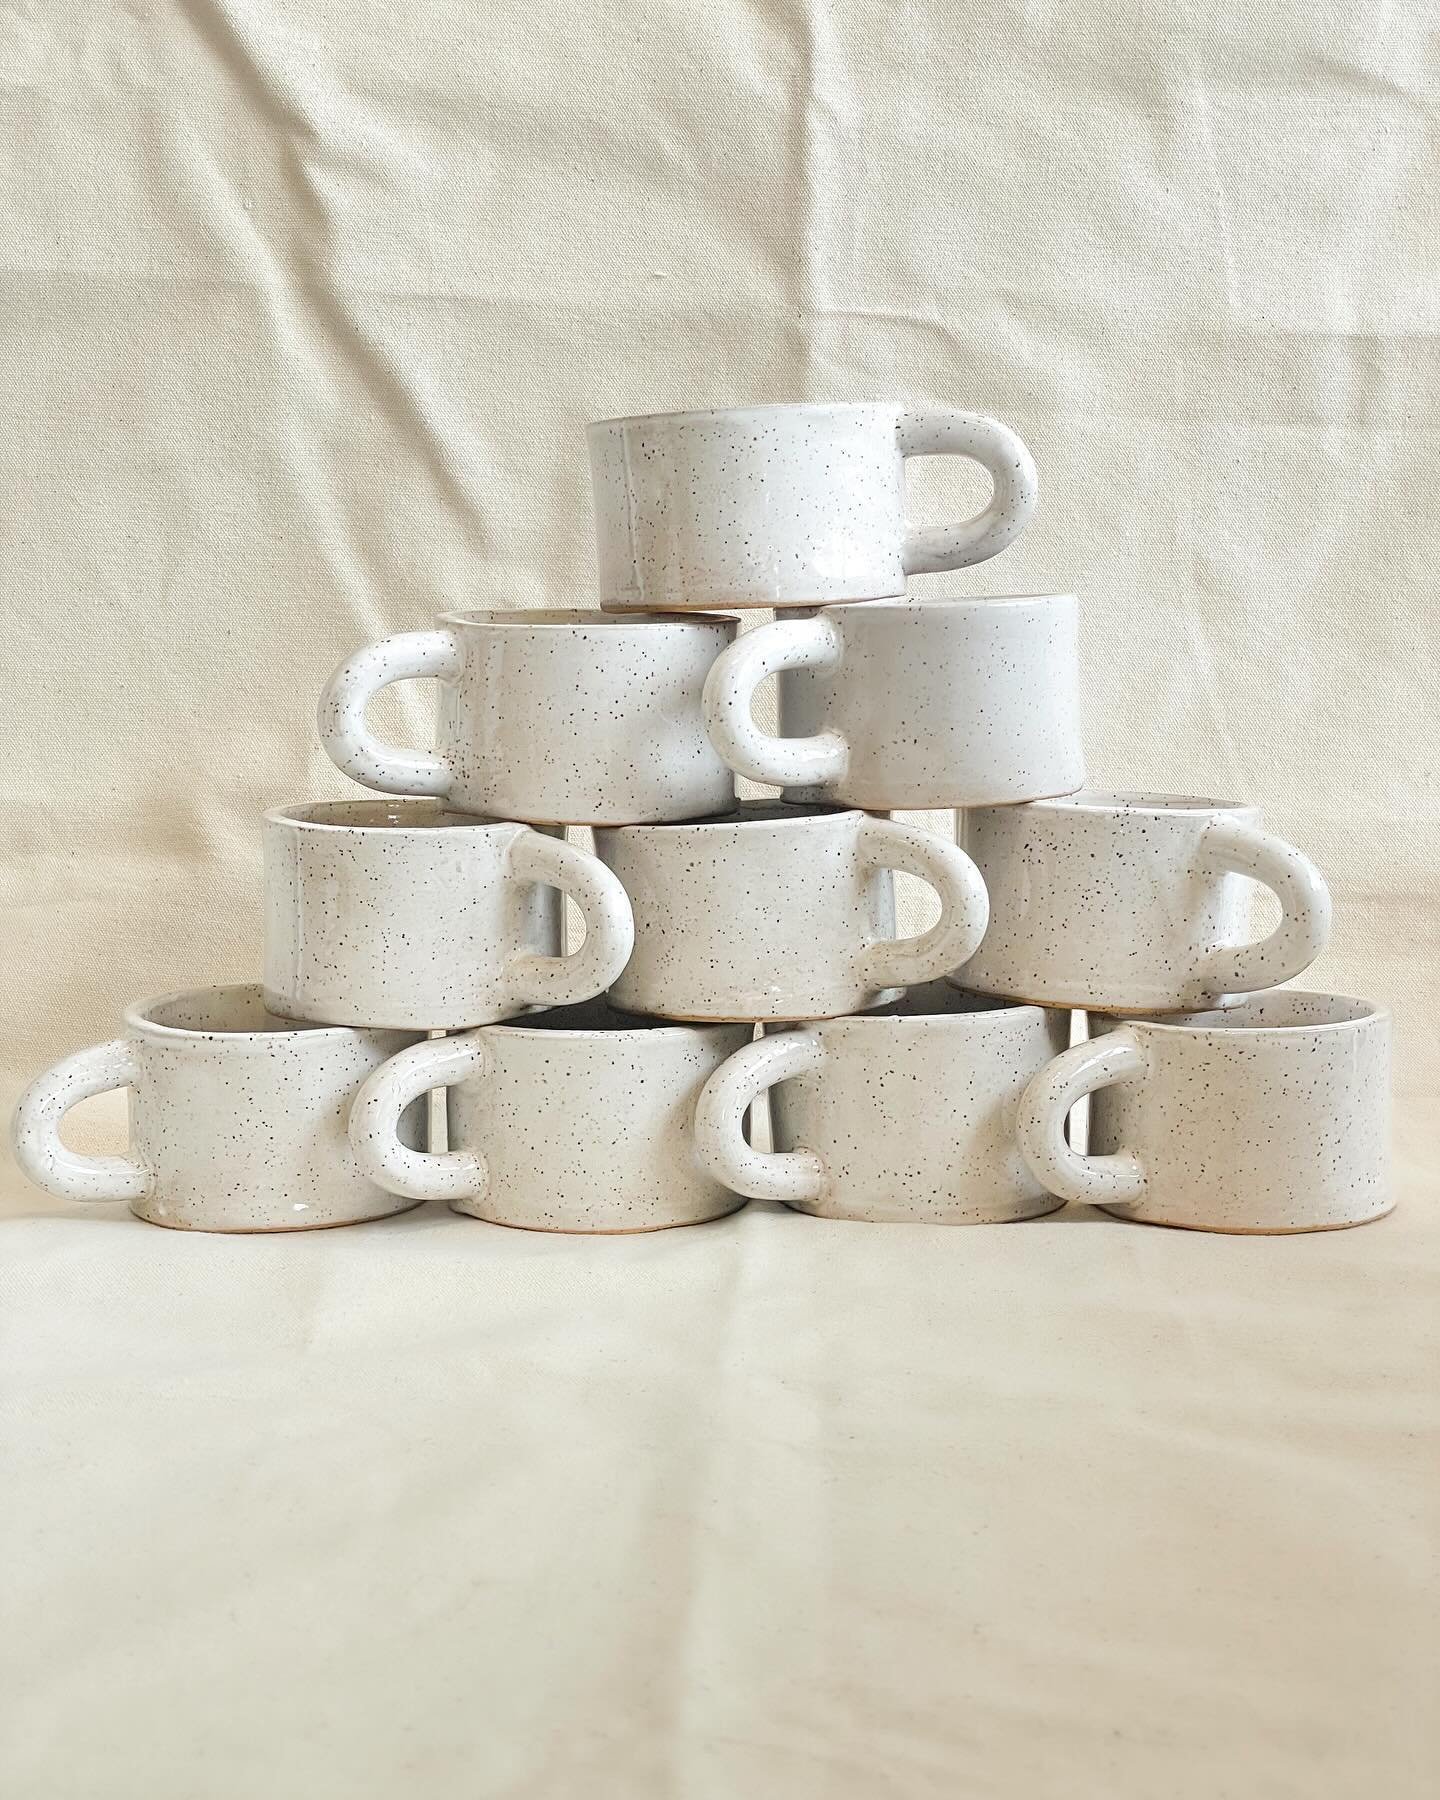 Sweet simple mugs off to their new home today. 
#mug #coffeemug #teacup #simple #handmade #clay #pottery